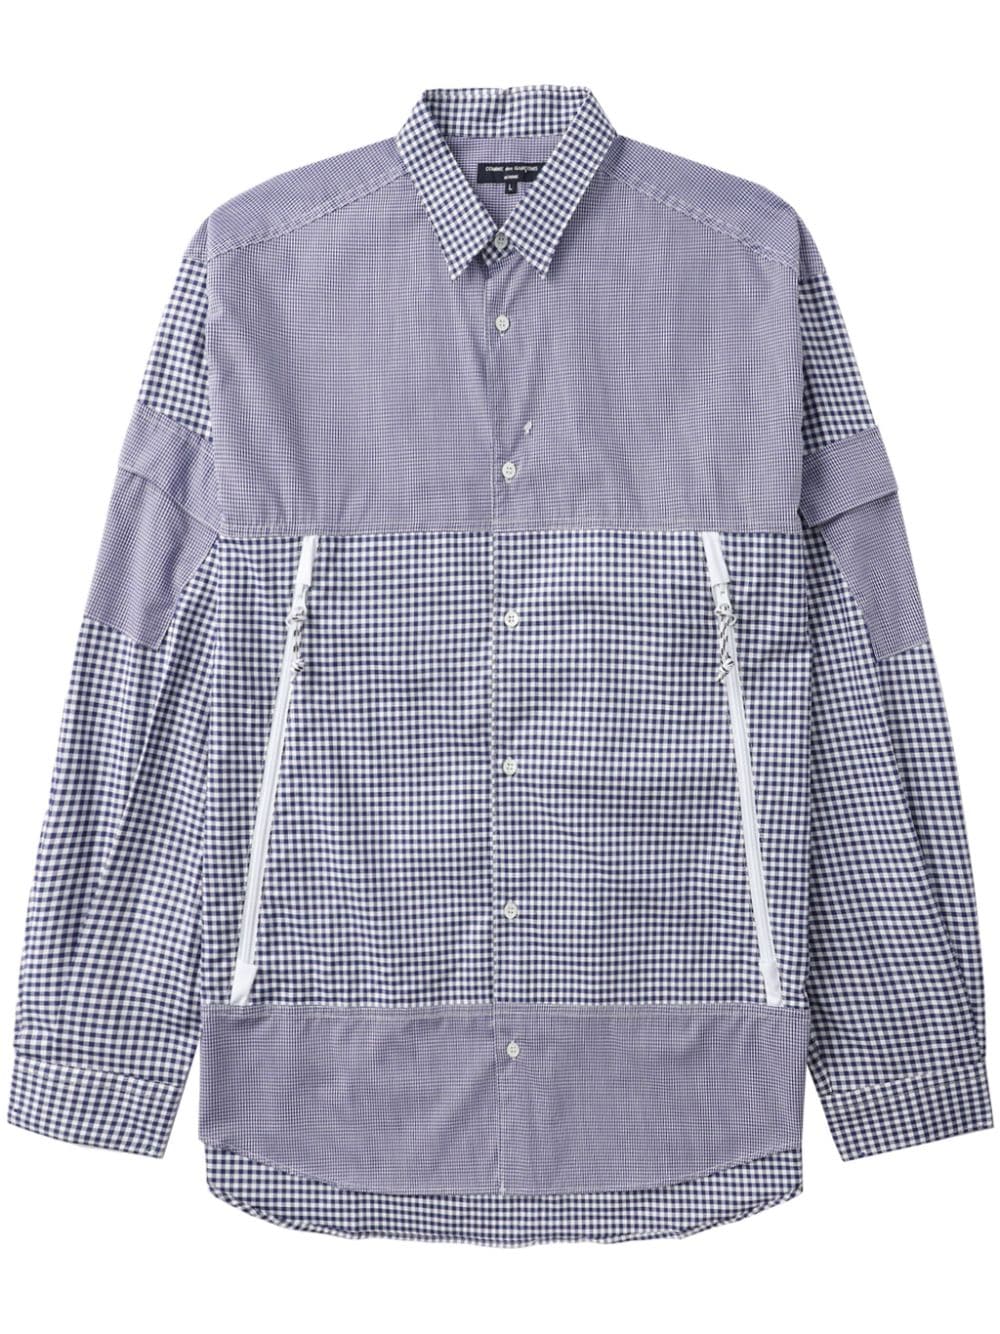 Comme des Garçons Homme grid-pattern panelled cotton shirt - Blue von Comme des Garçons Homme